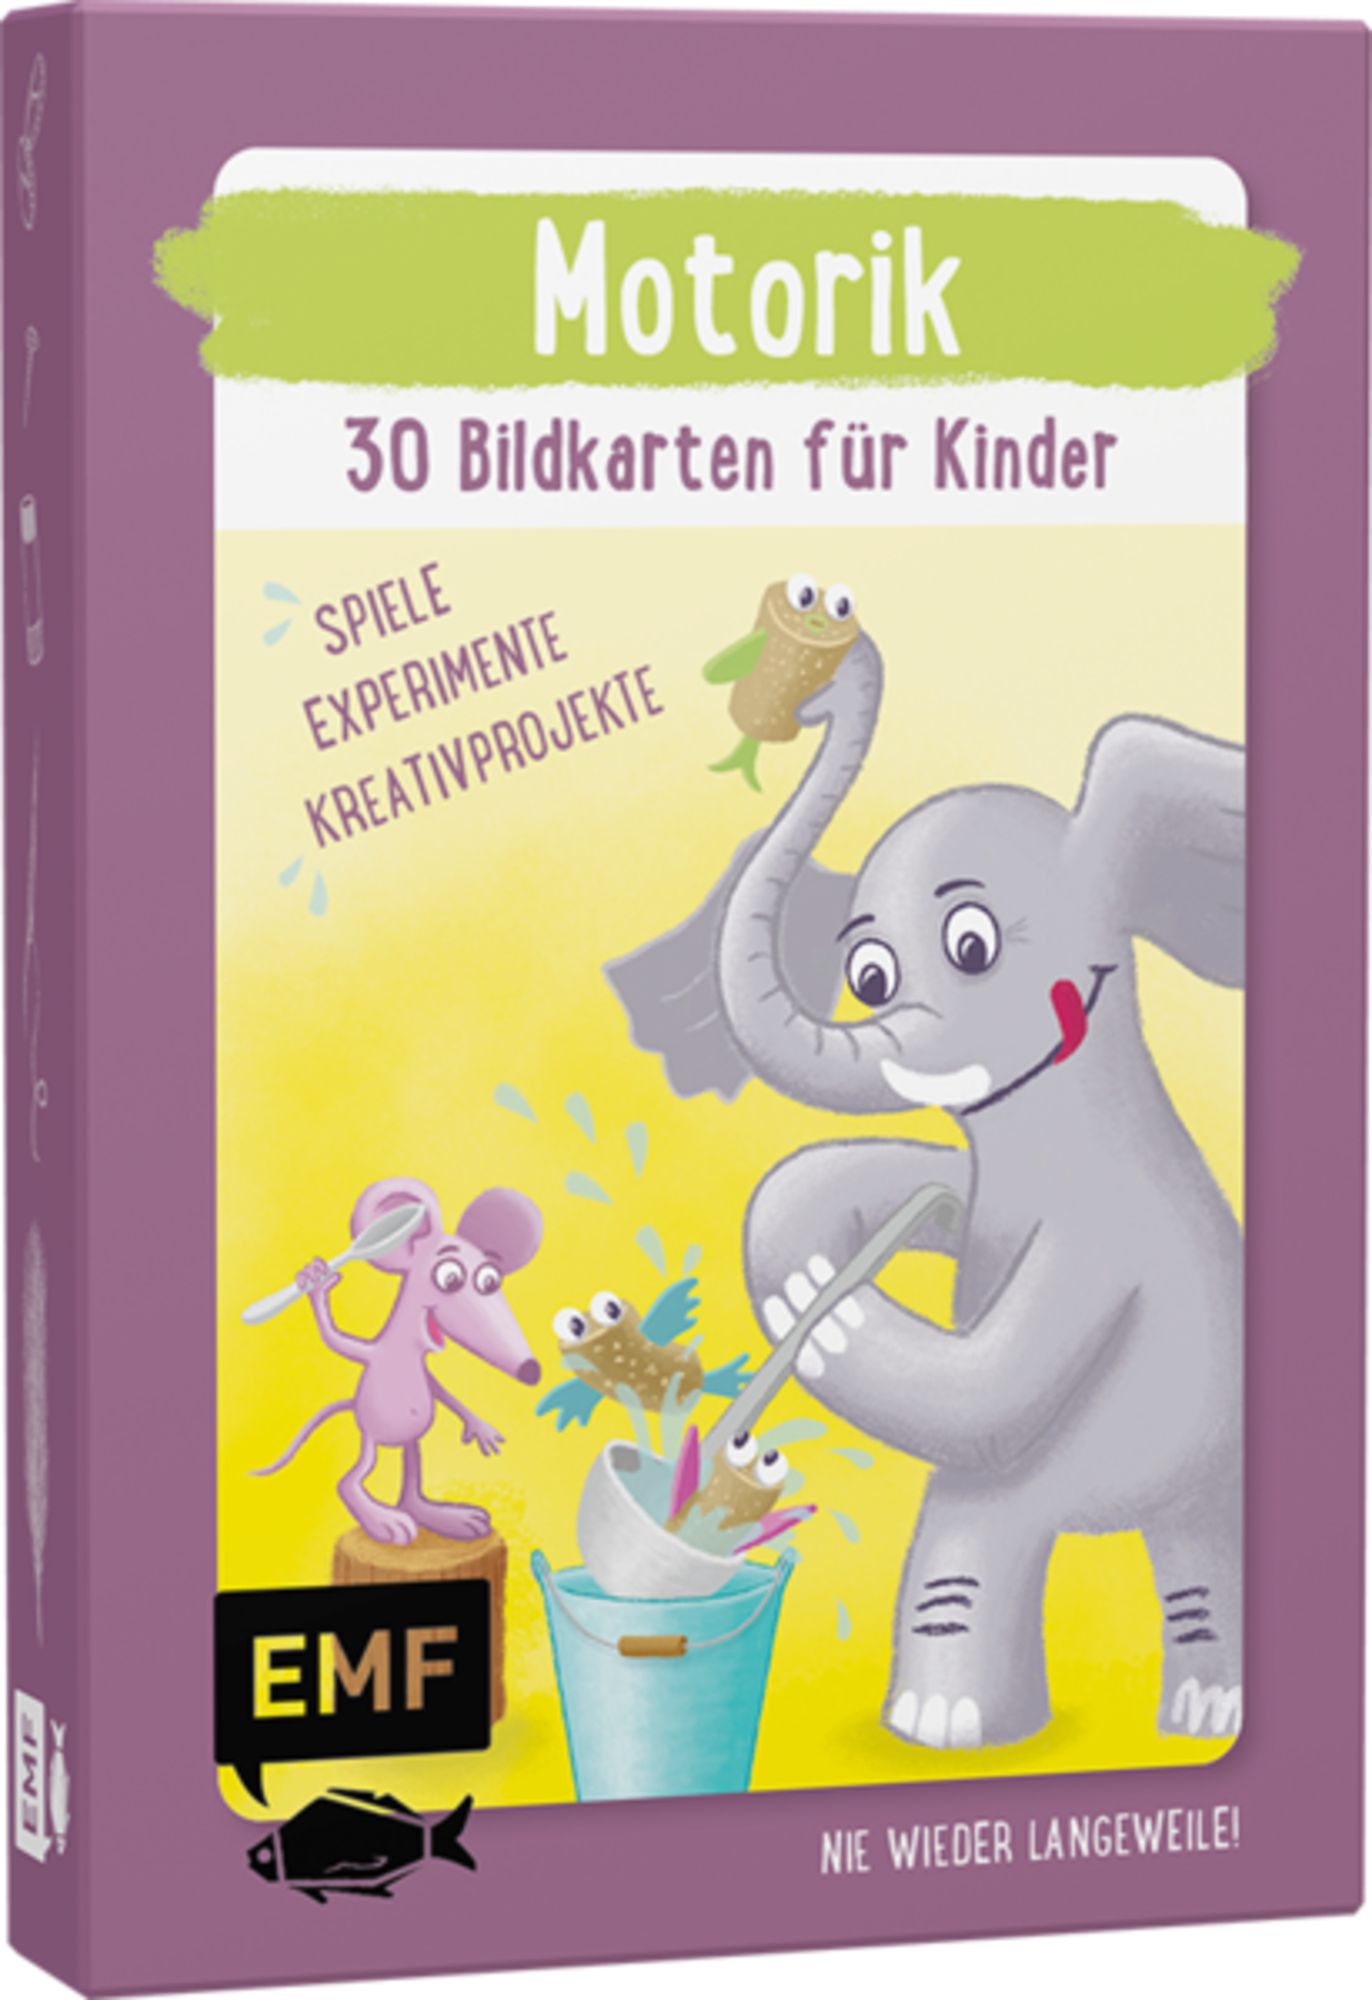 https://images.thalia.media/-/BF2000-2000/e14c63bdd27d497eb0d66a15f666399c/motorik-30-bildkarten-fuer-kinder-im-kindergarten-und-vorschulalter.png